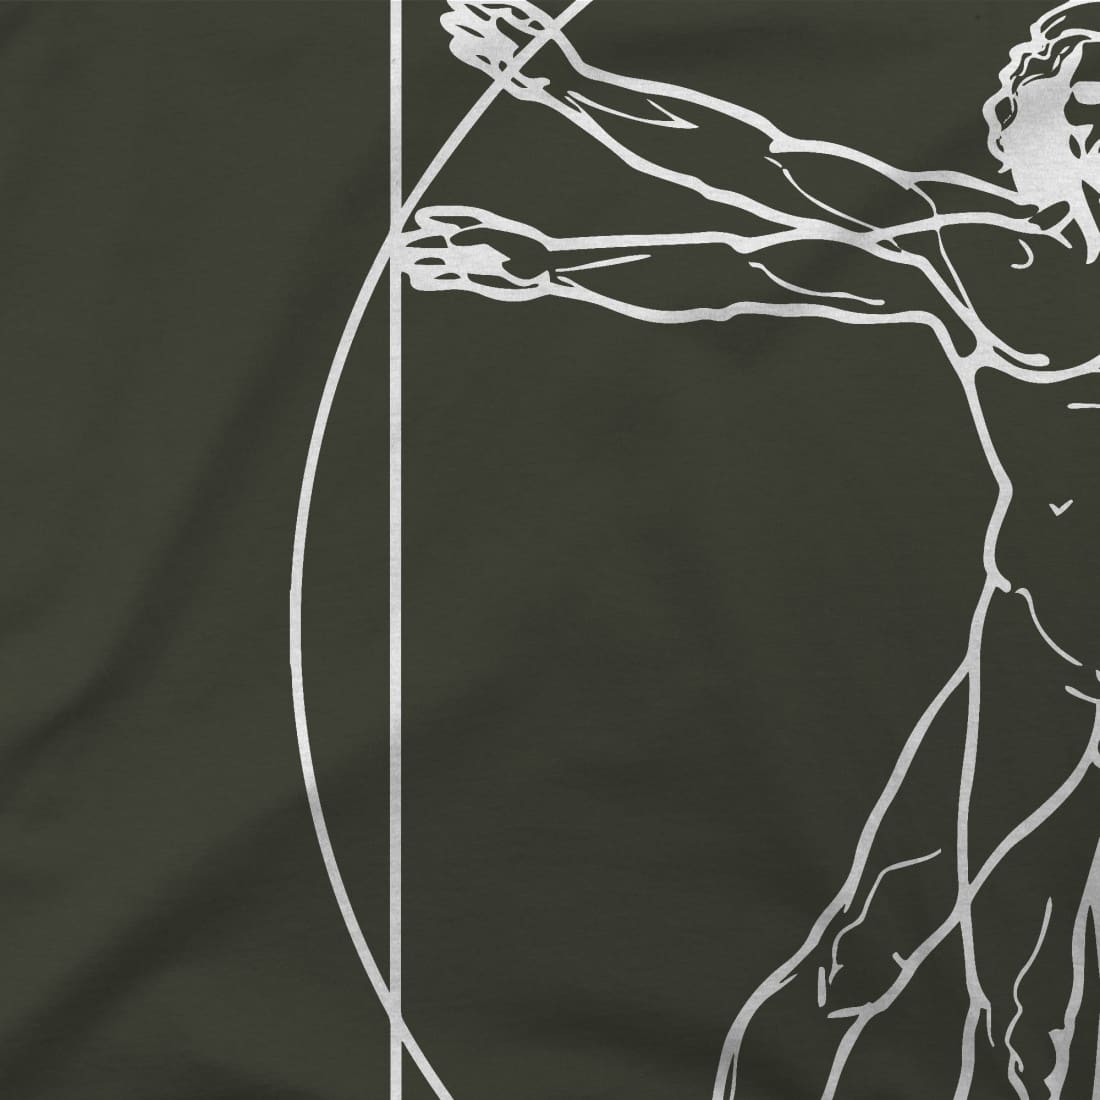 Leonardo Da Vinci, Vitruvian Man Sketch T-Shirt - KME means the very best